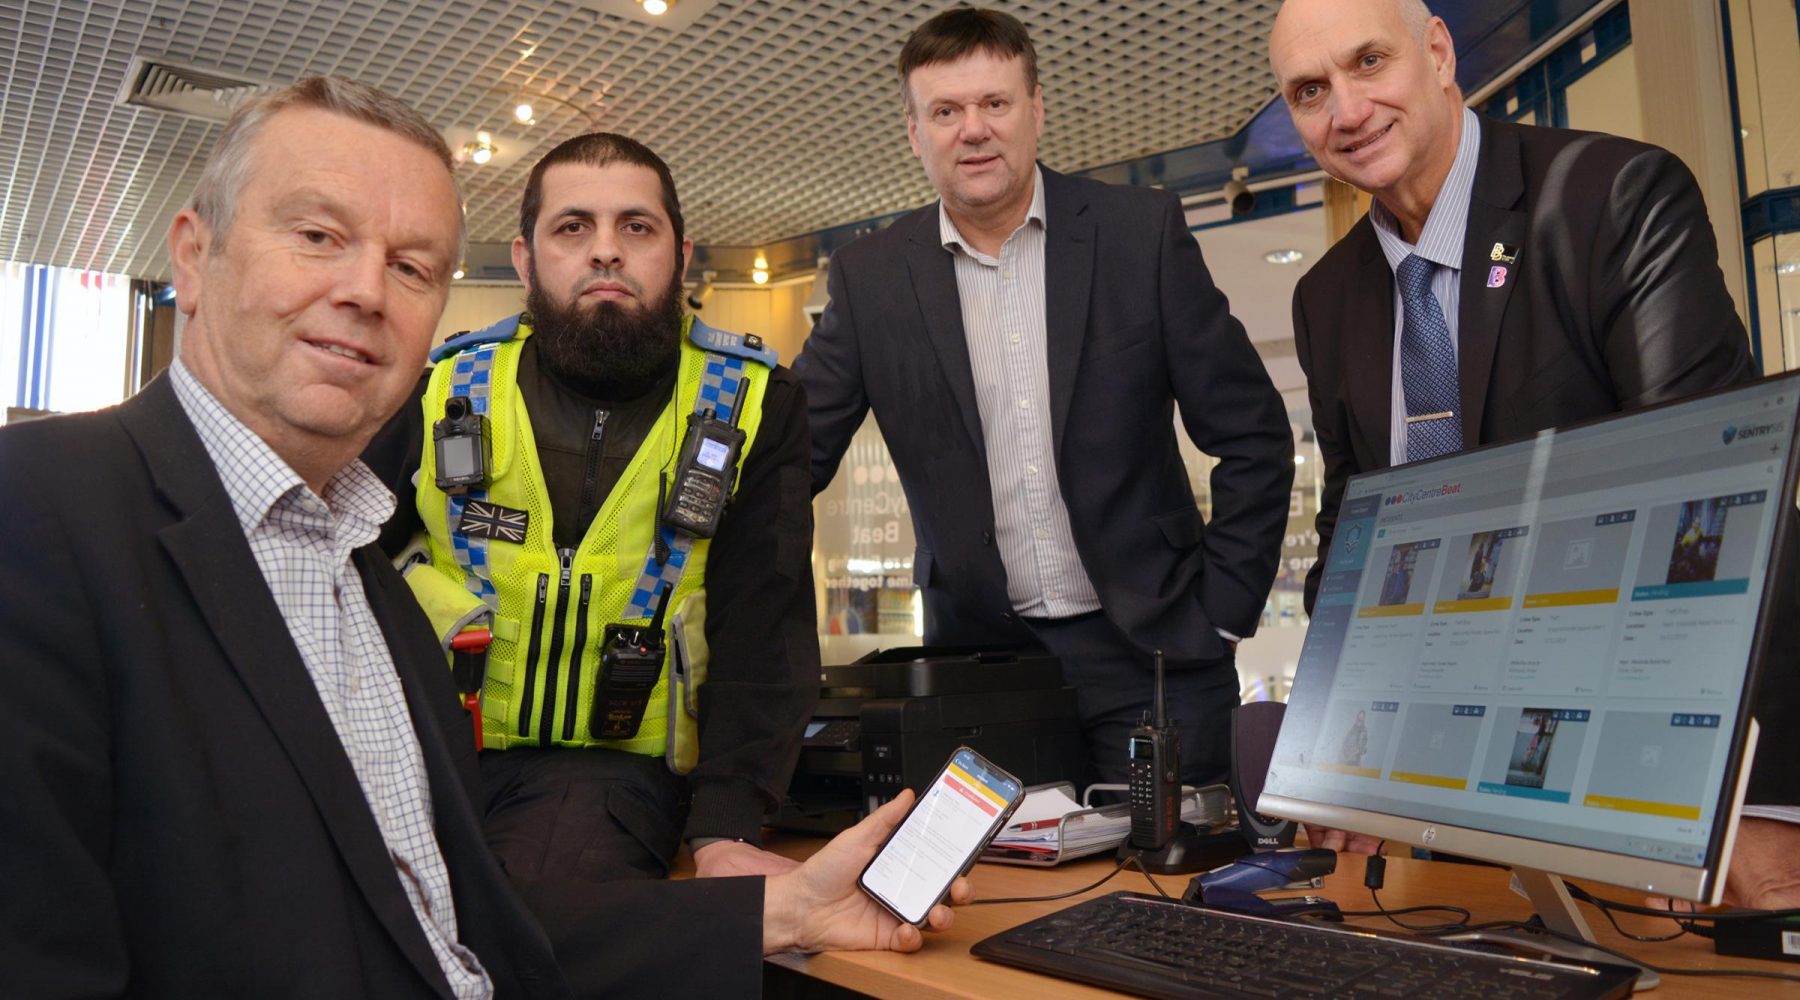 New app to help beat Bradford crime